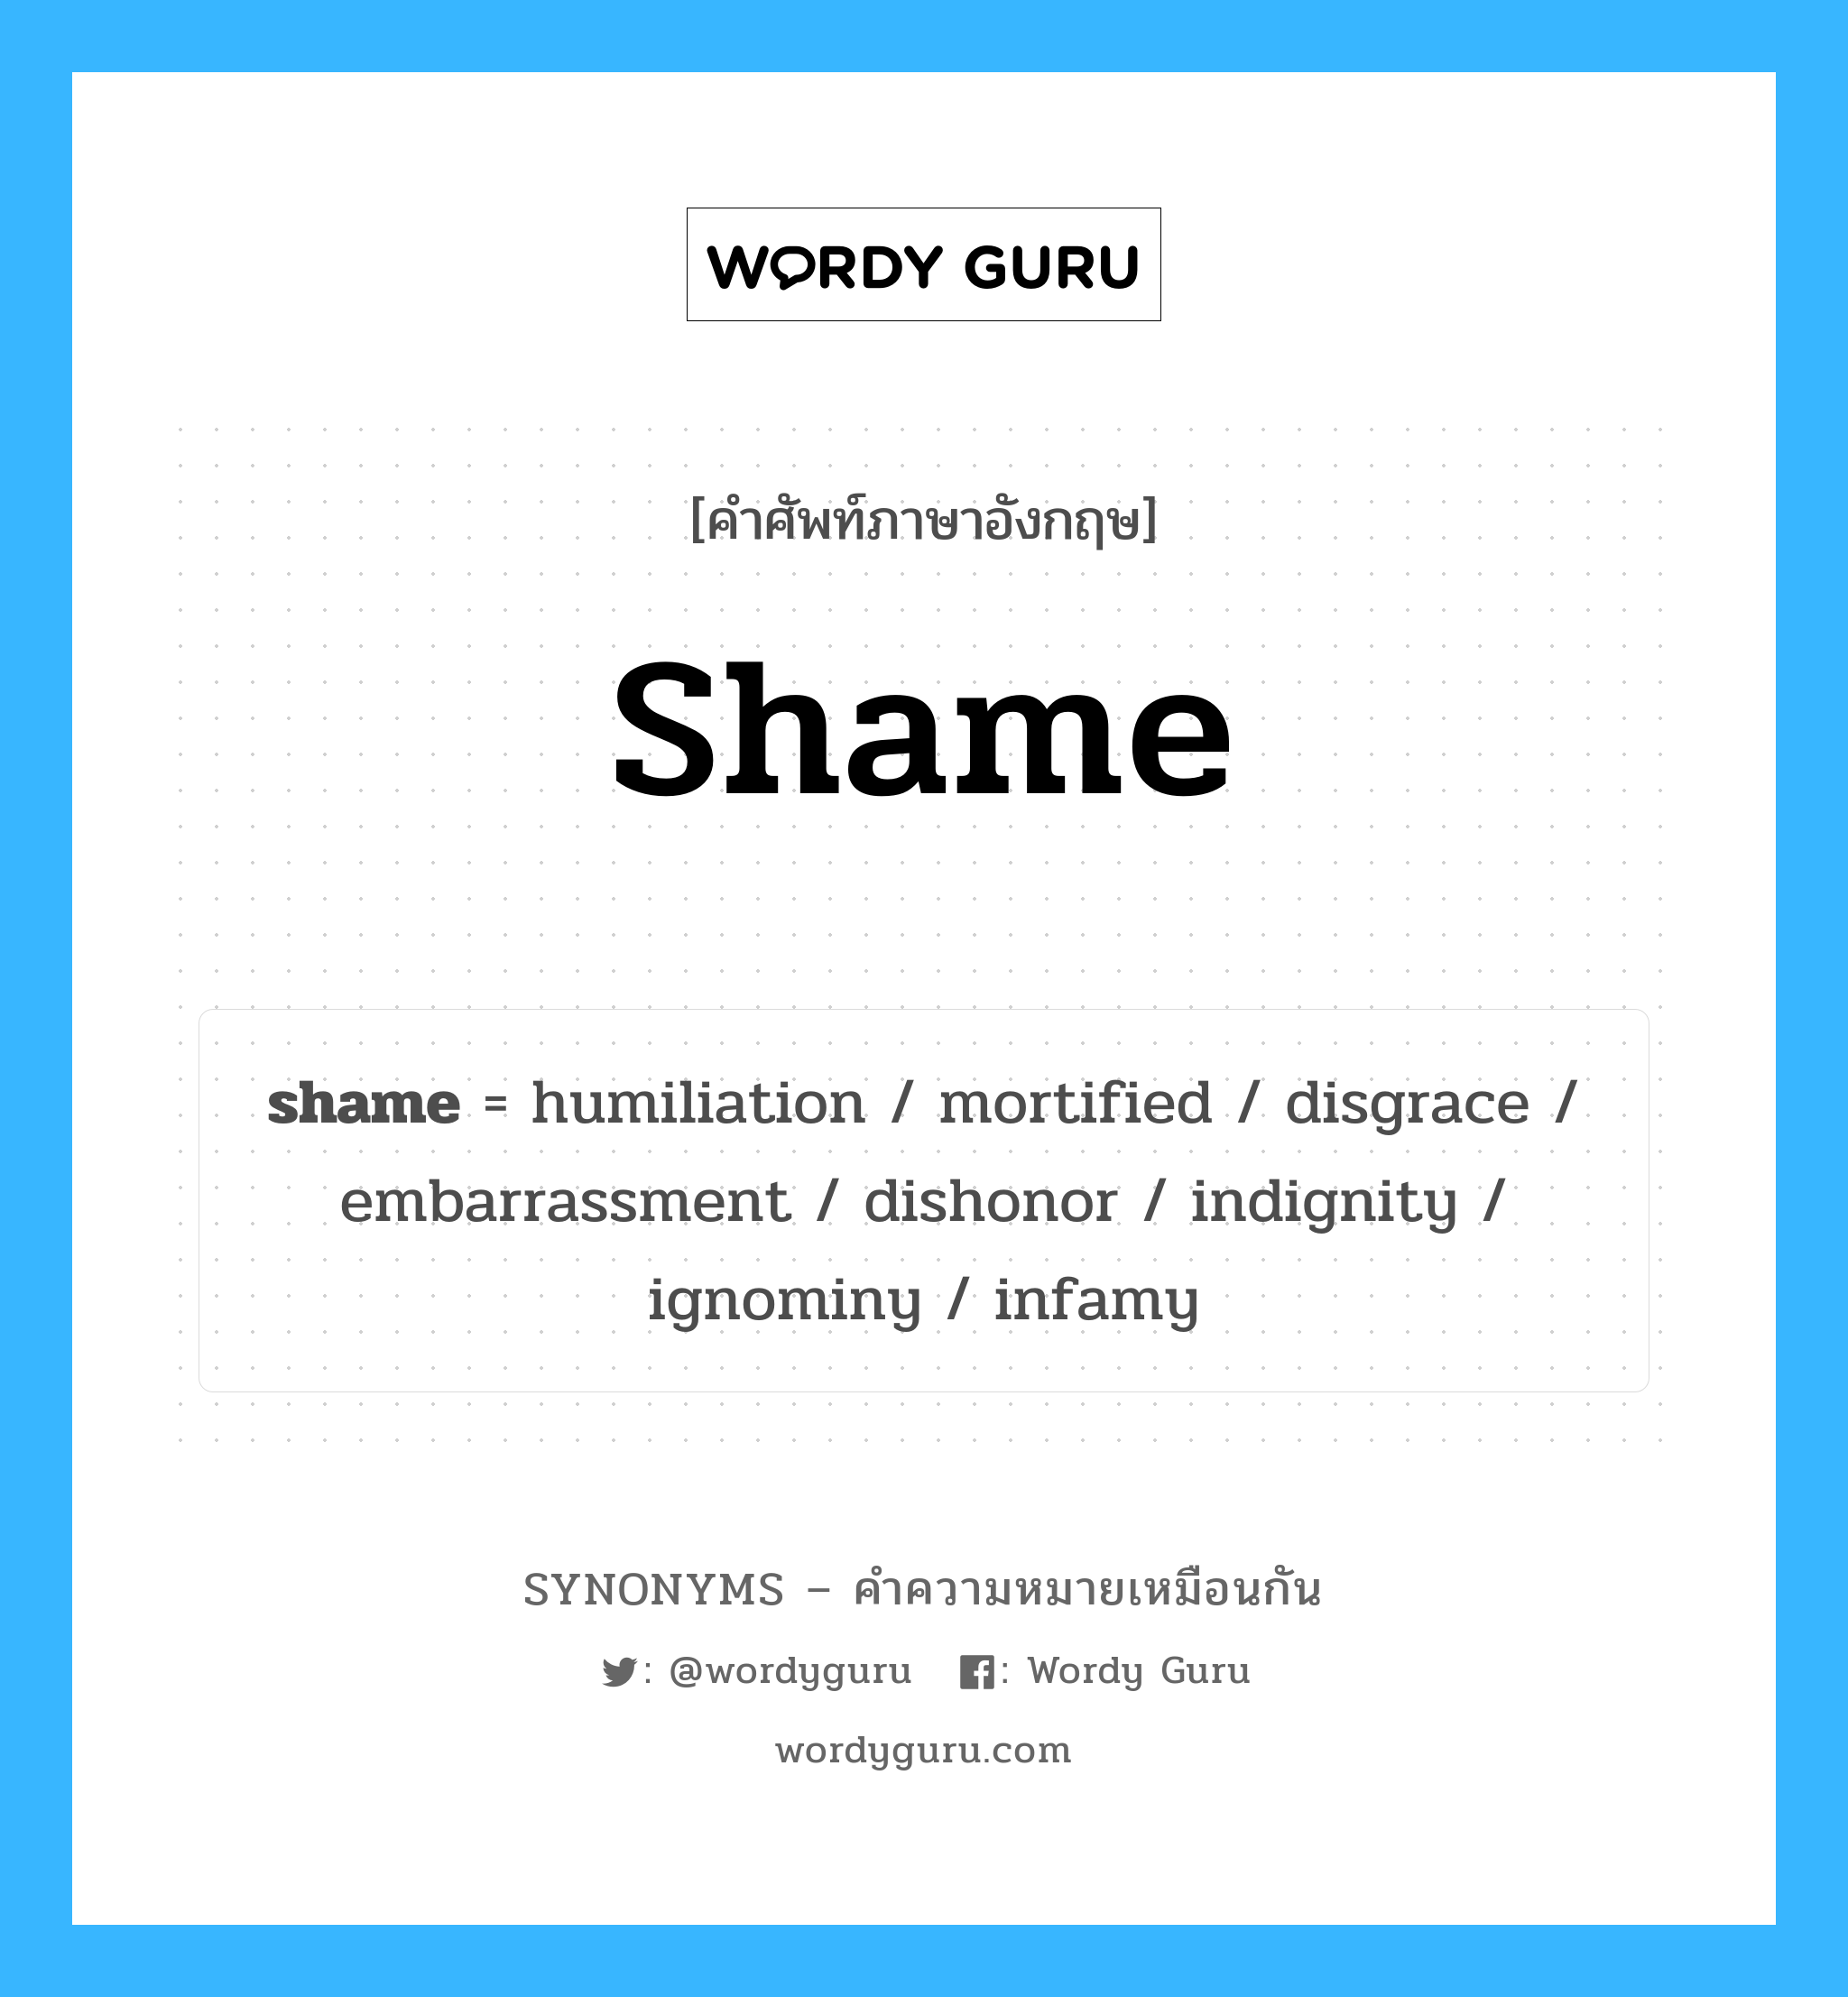 embarrassment เป็นหนึ่งใน shame และมีคำอื่น ๆ อีกดังนี้, คำศัพท์ภาษาอังกฤษ embarrassment ความหมายคล้ายกันกับ shame แปลว่า ความลำบากใจ หมวด shame